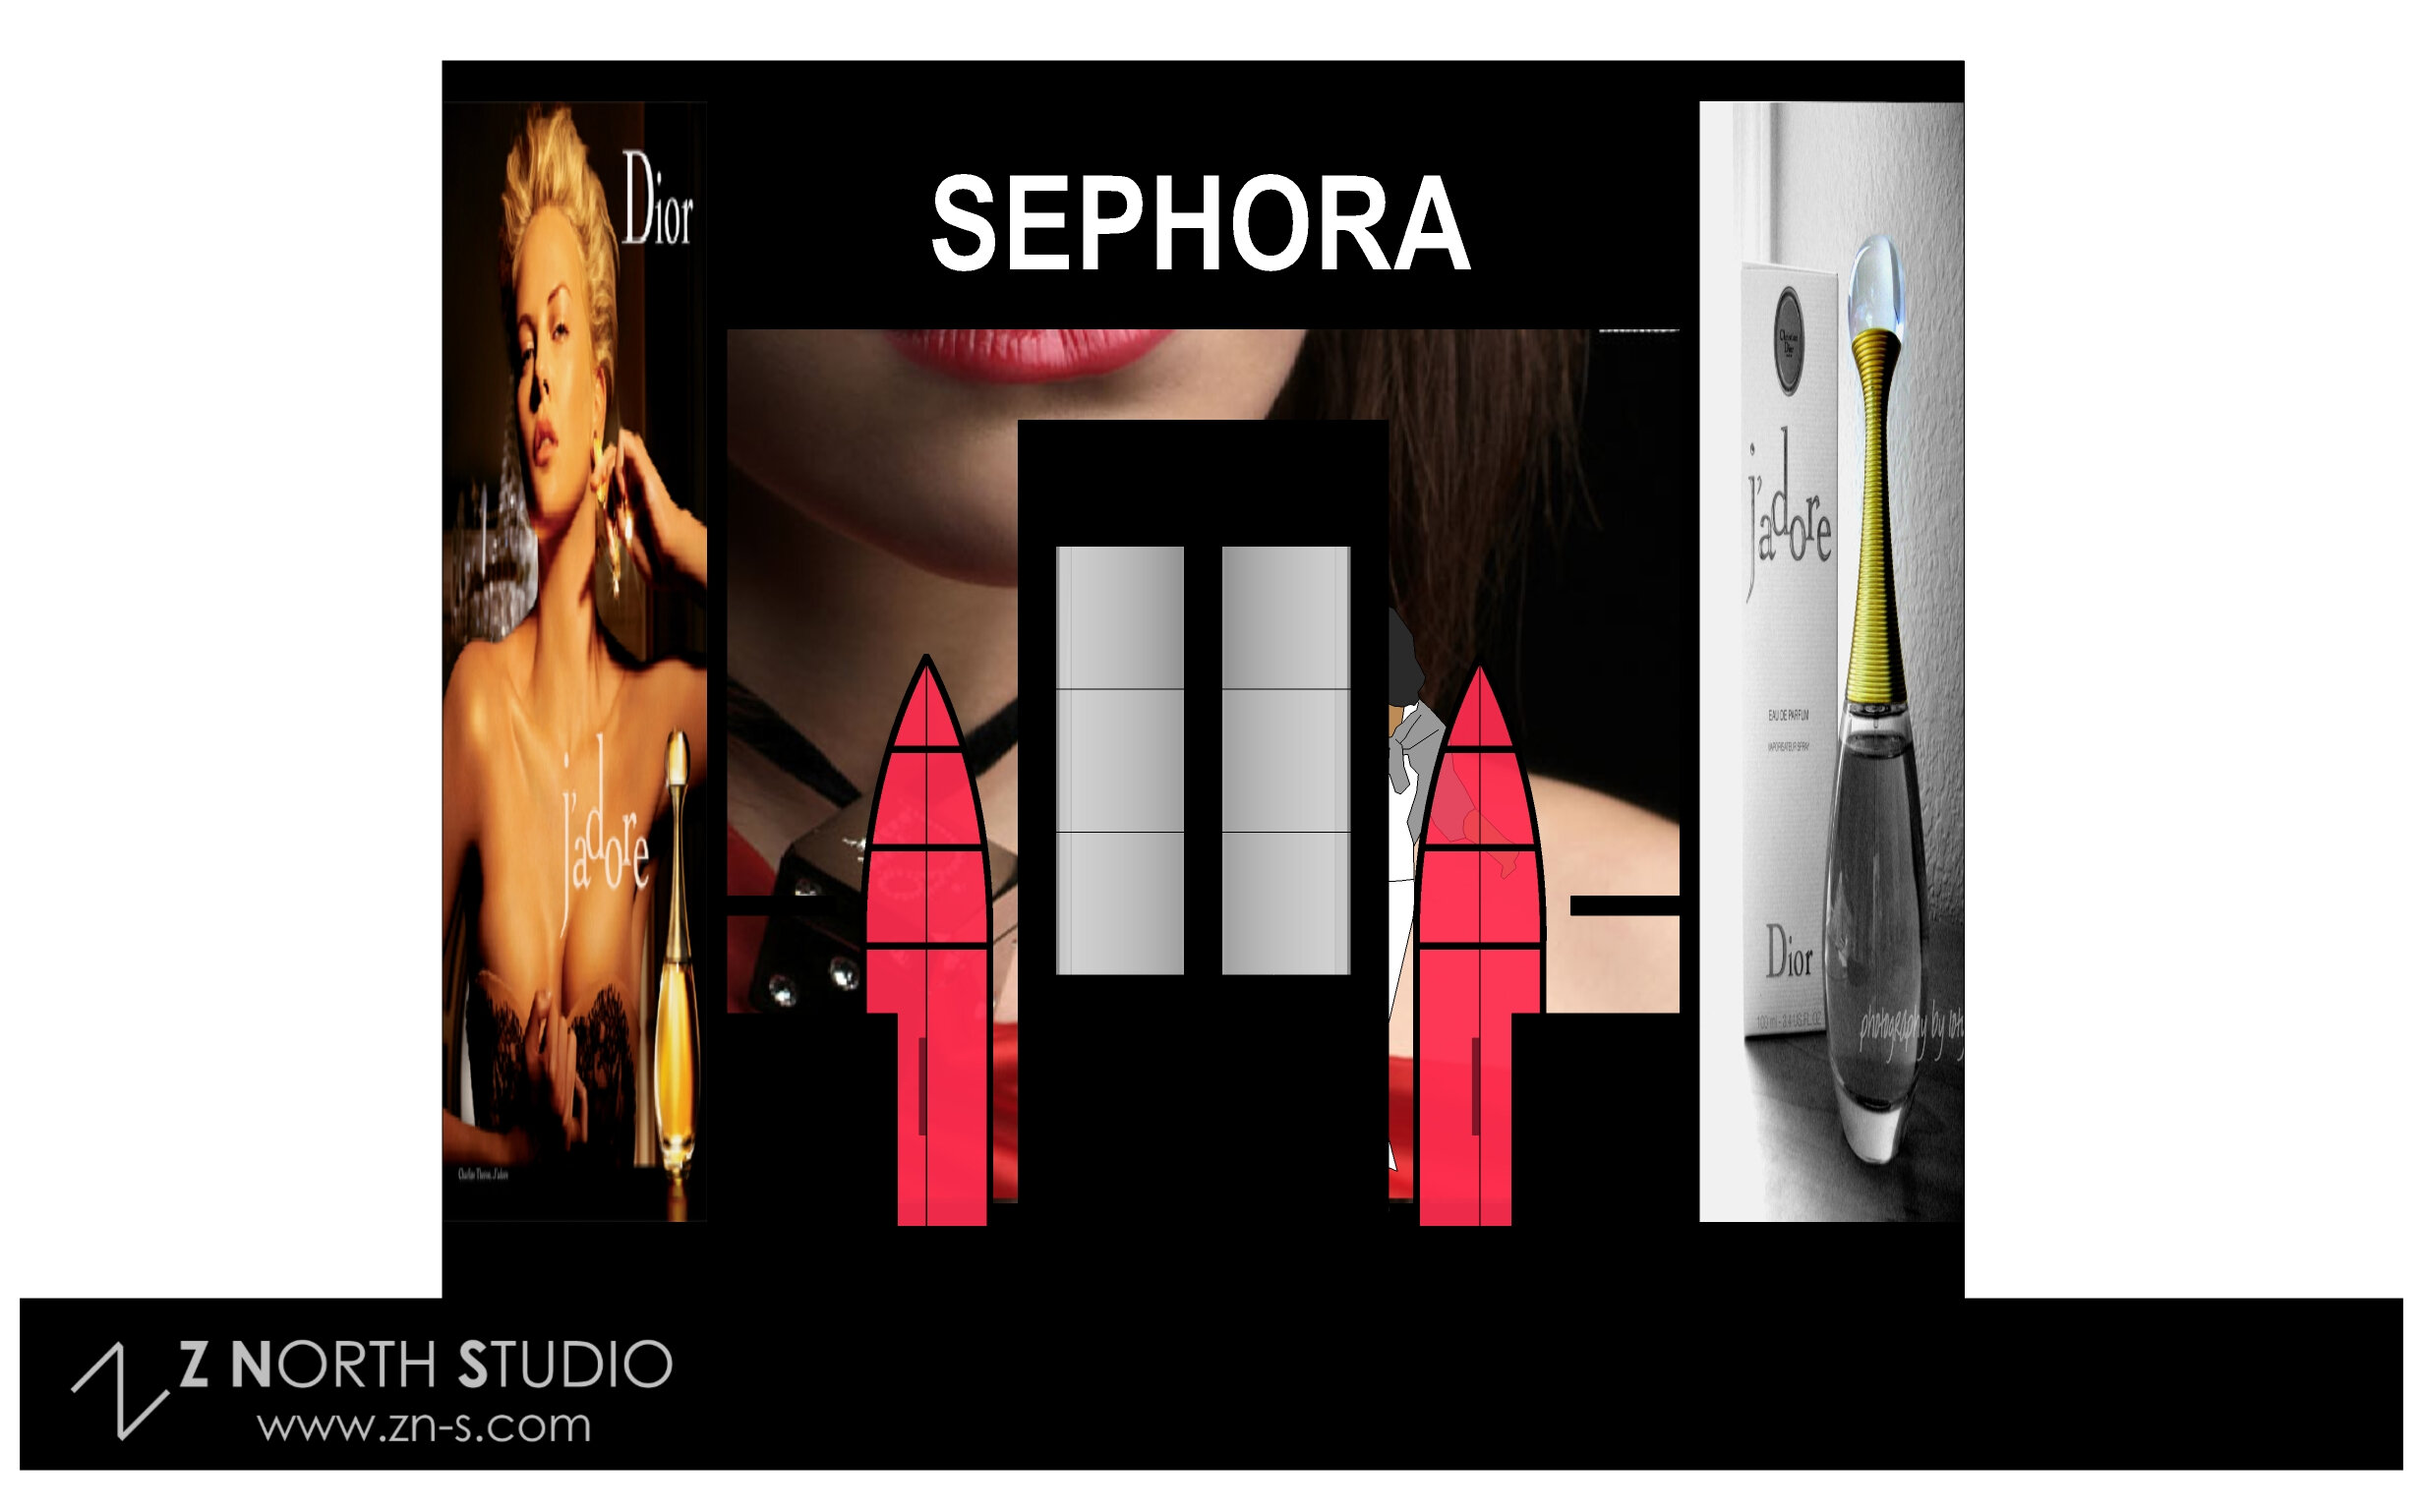 SEPHORA - www.sephora.com - Interior design by Z North Studio (7).jpg